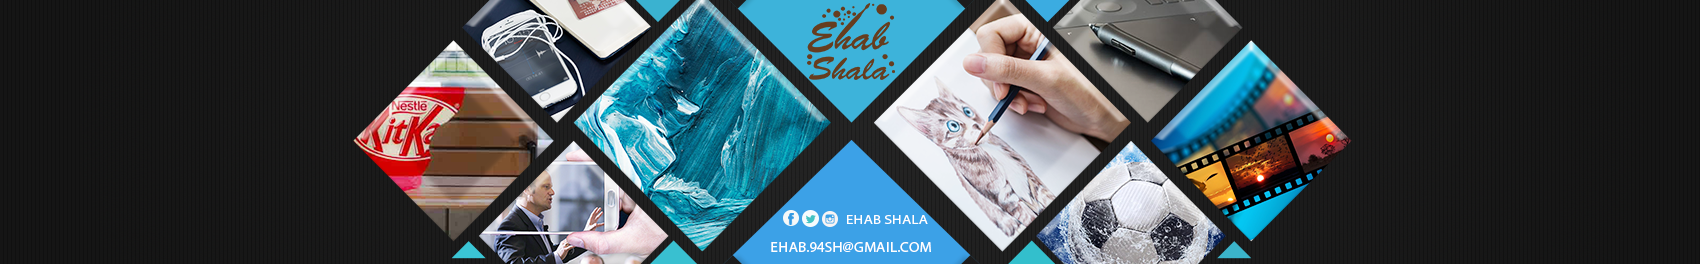 ehab shala's profile banner